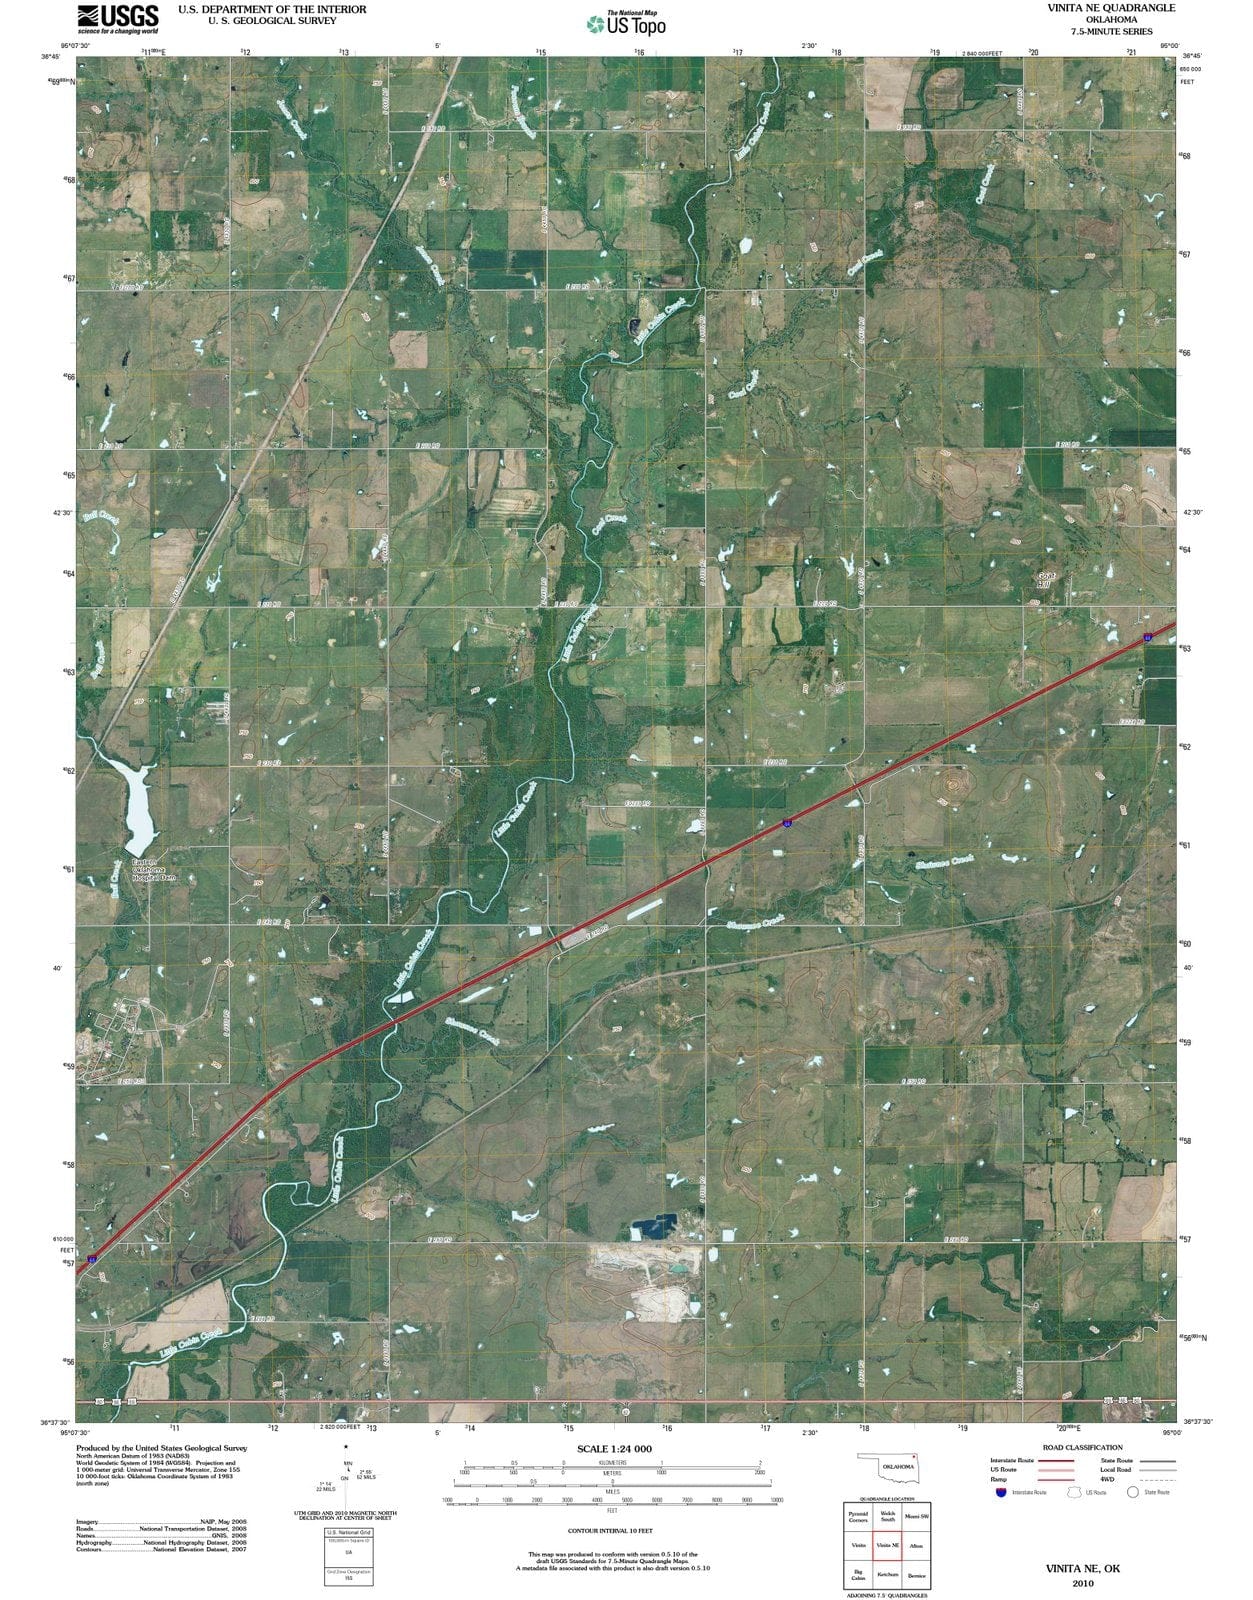 2010 Vinita, OK - Oklahoma - USGS Topographic Map